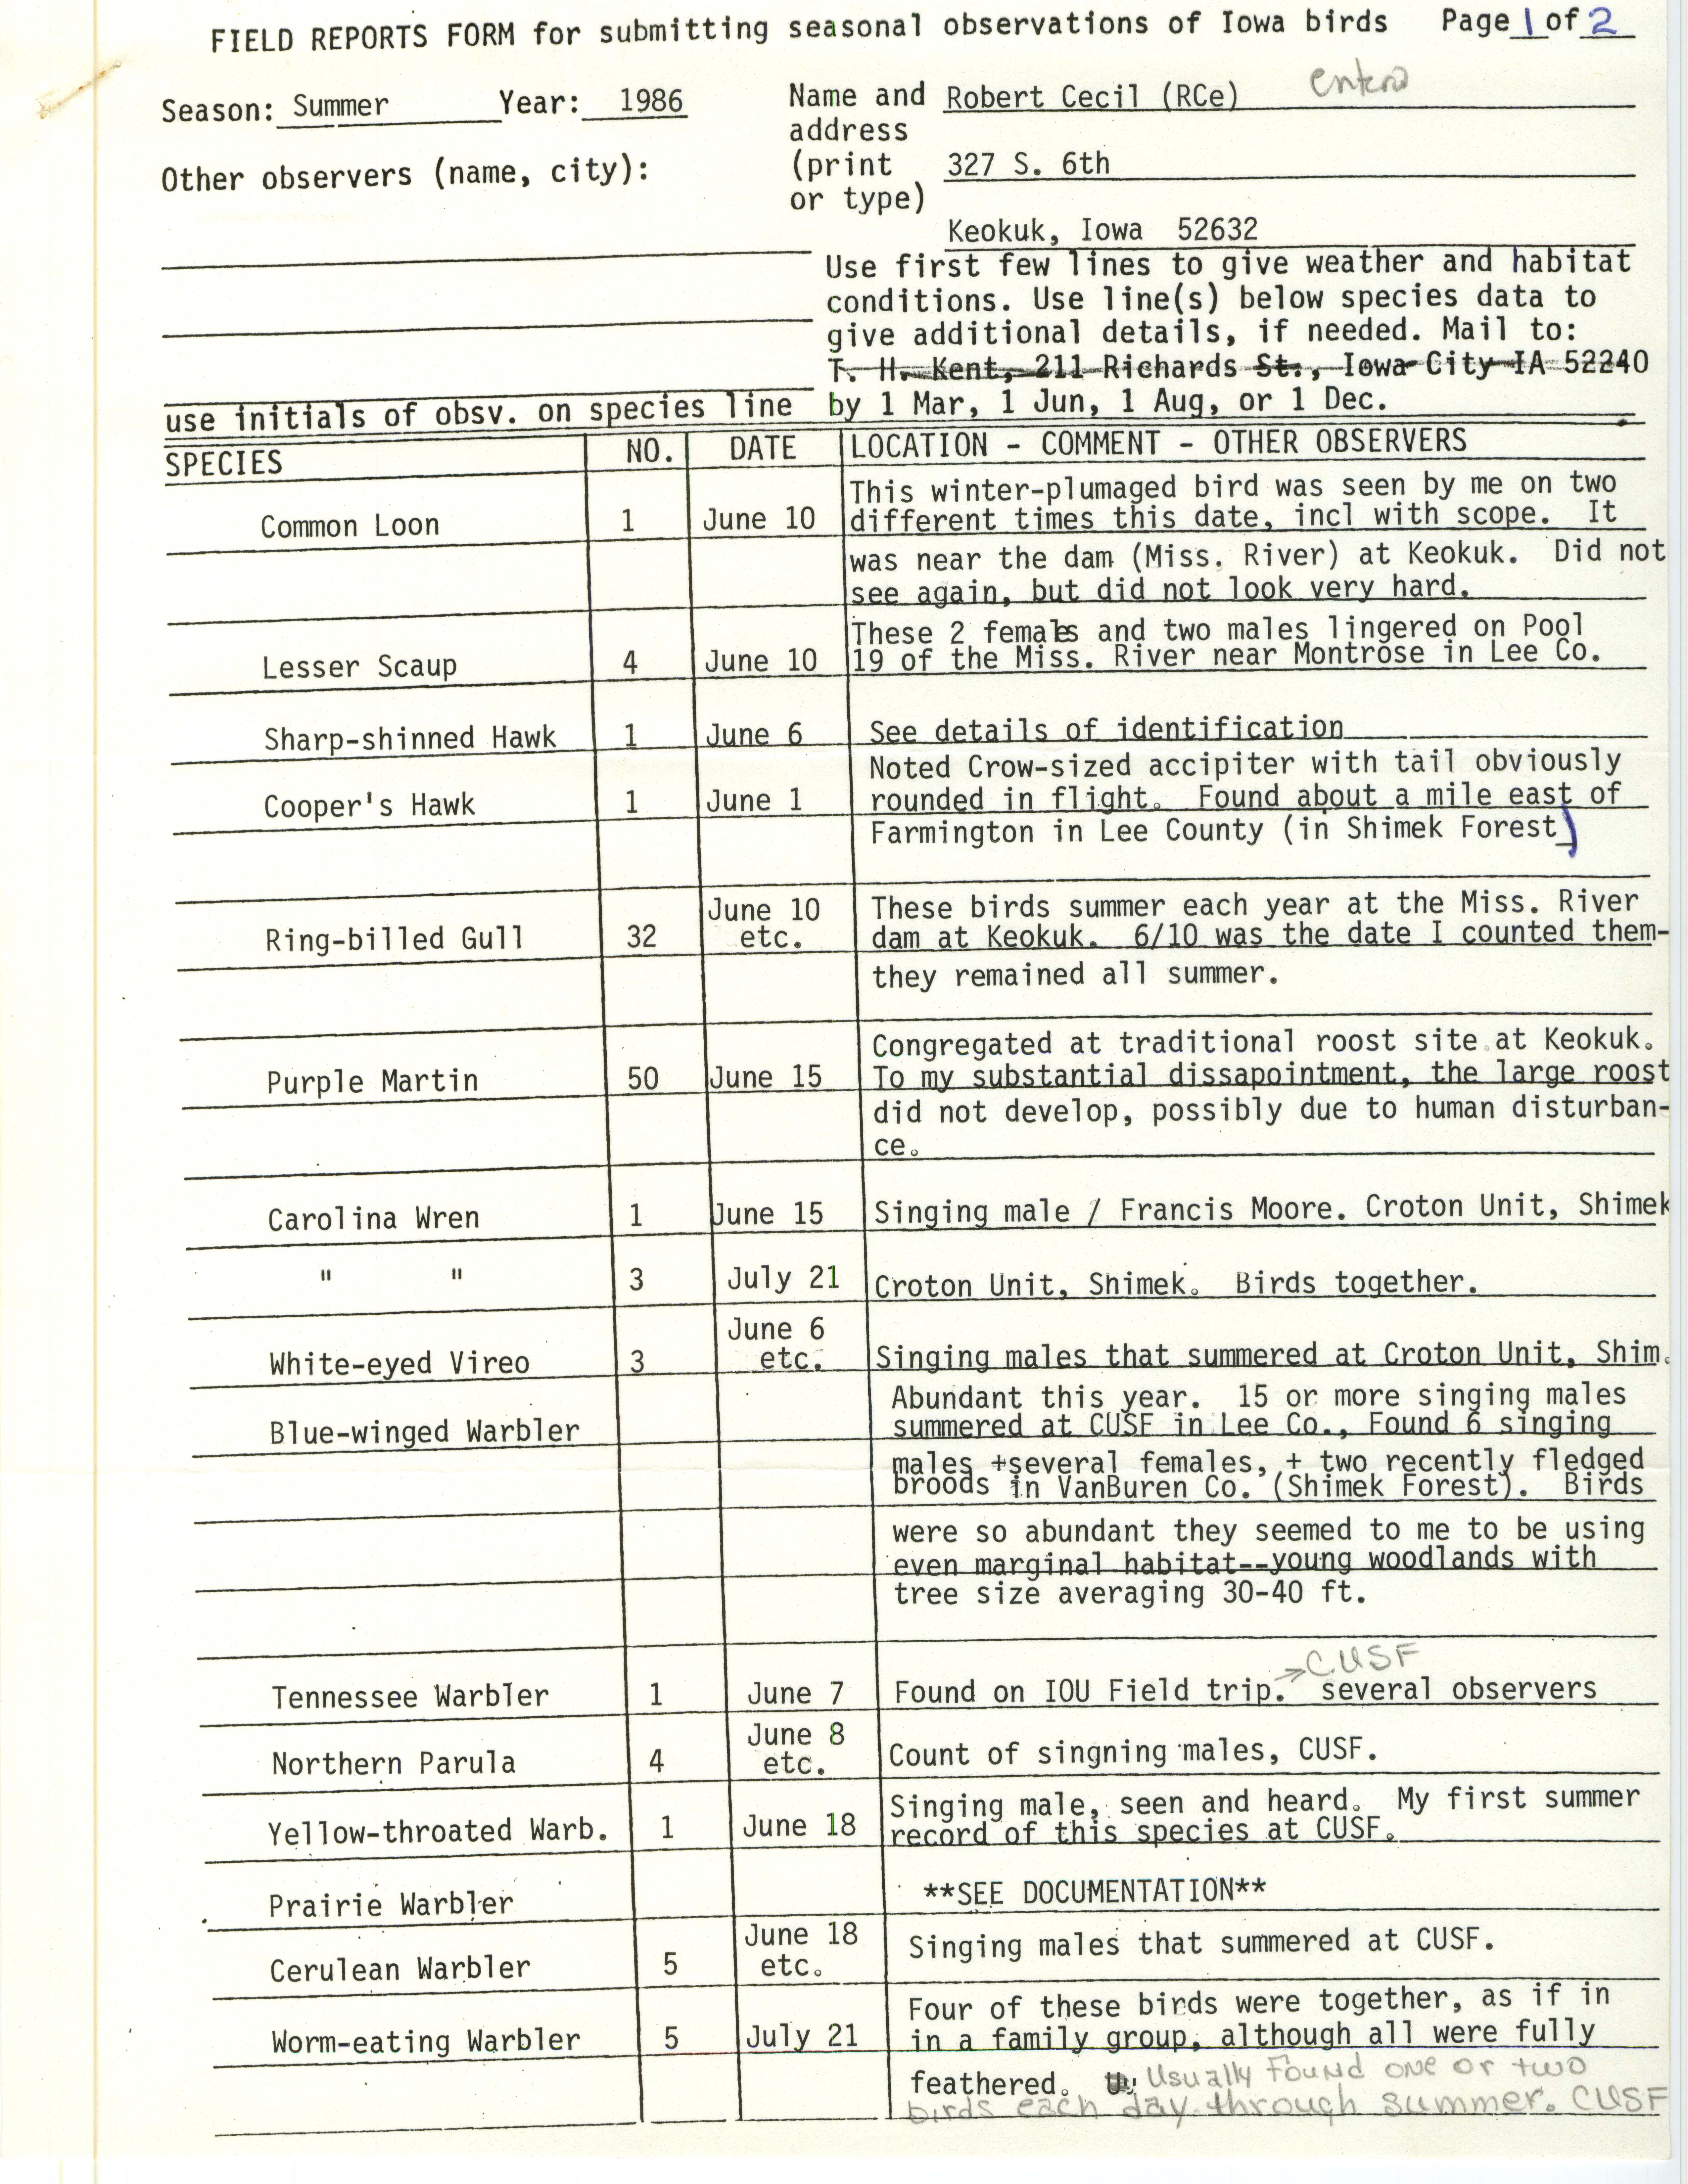 Robert I. Cecil letter to James J. Dinsmore regarding bird sightings July 31, 1986 